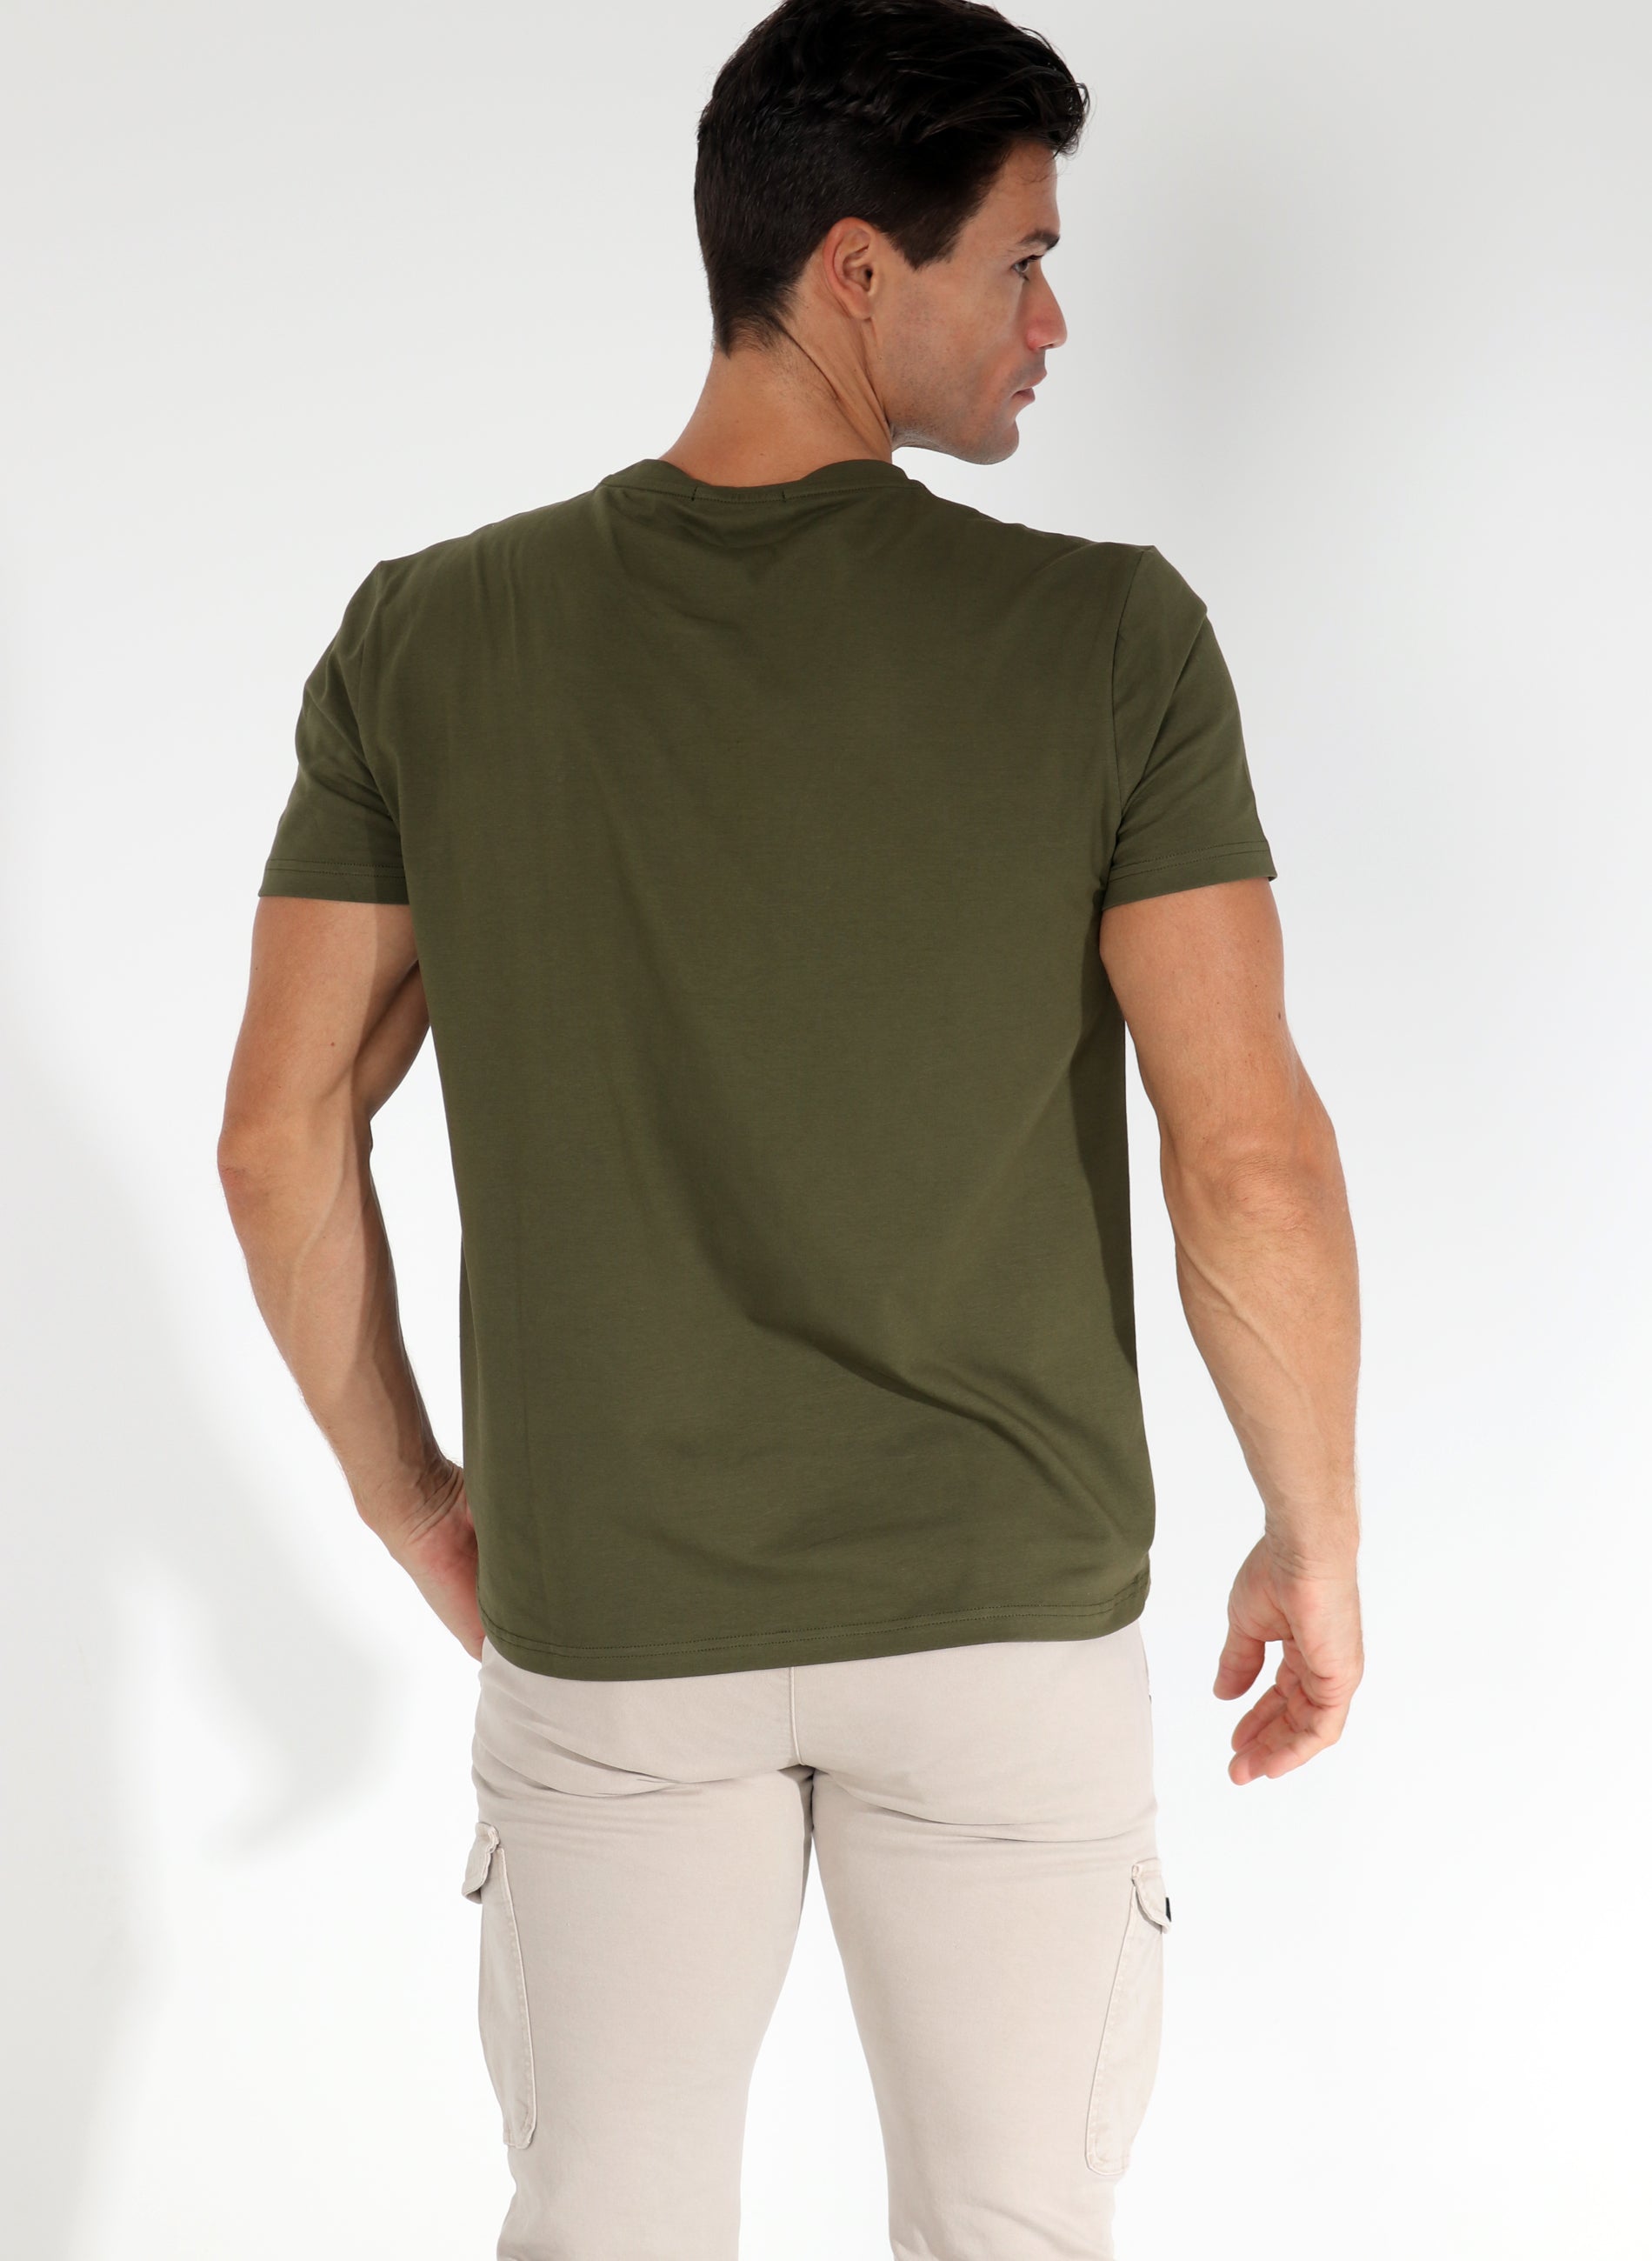 Men's T-shirt Green Khaki Aviator